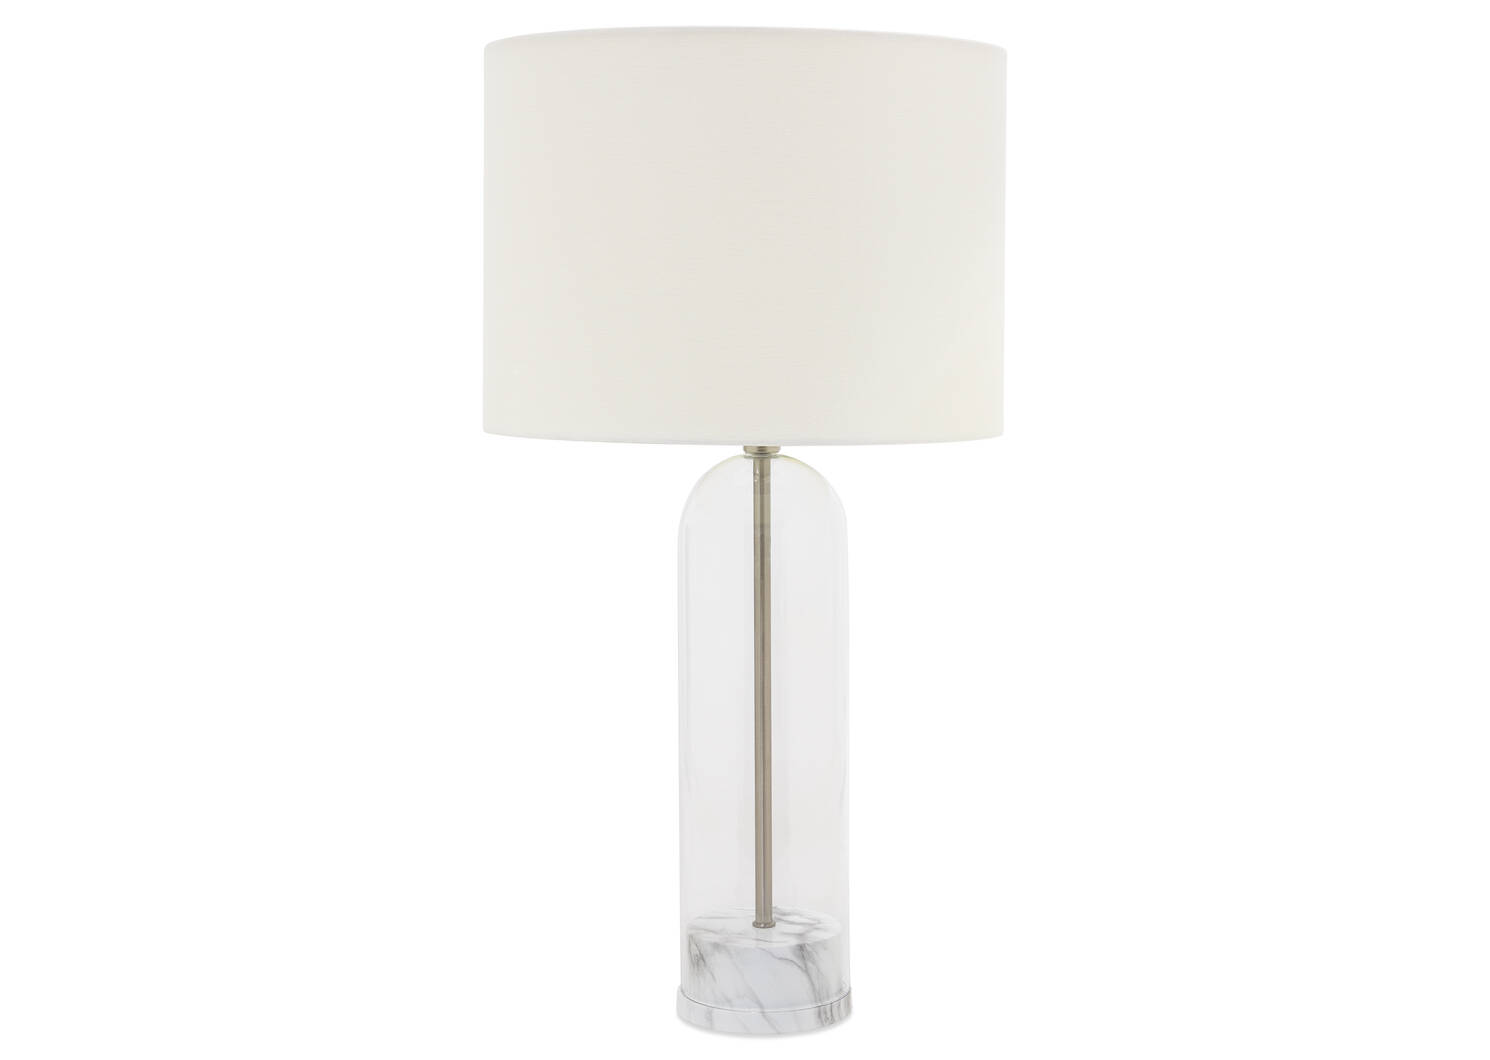 Clarent Table Lamp